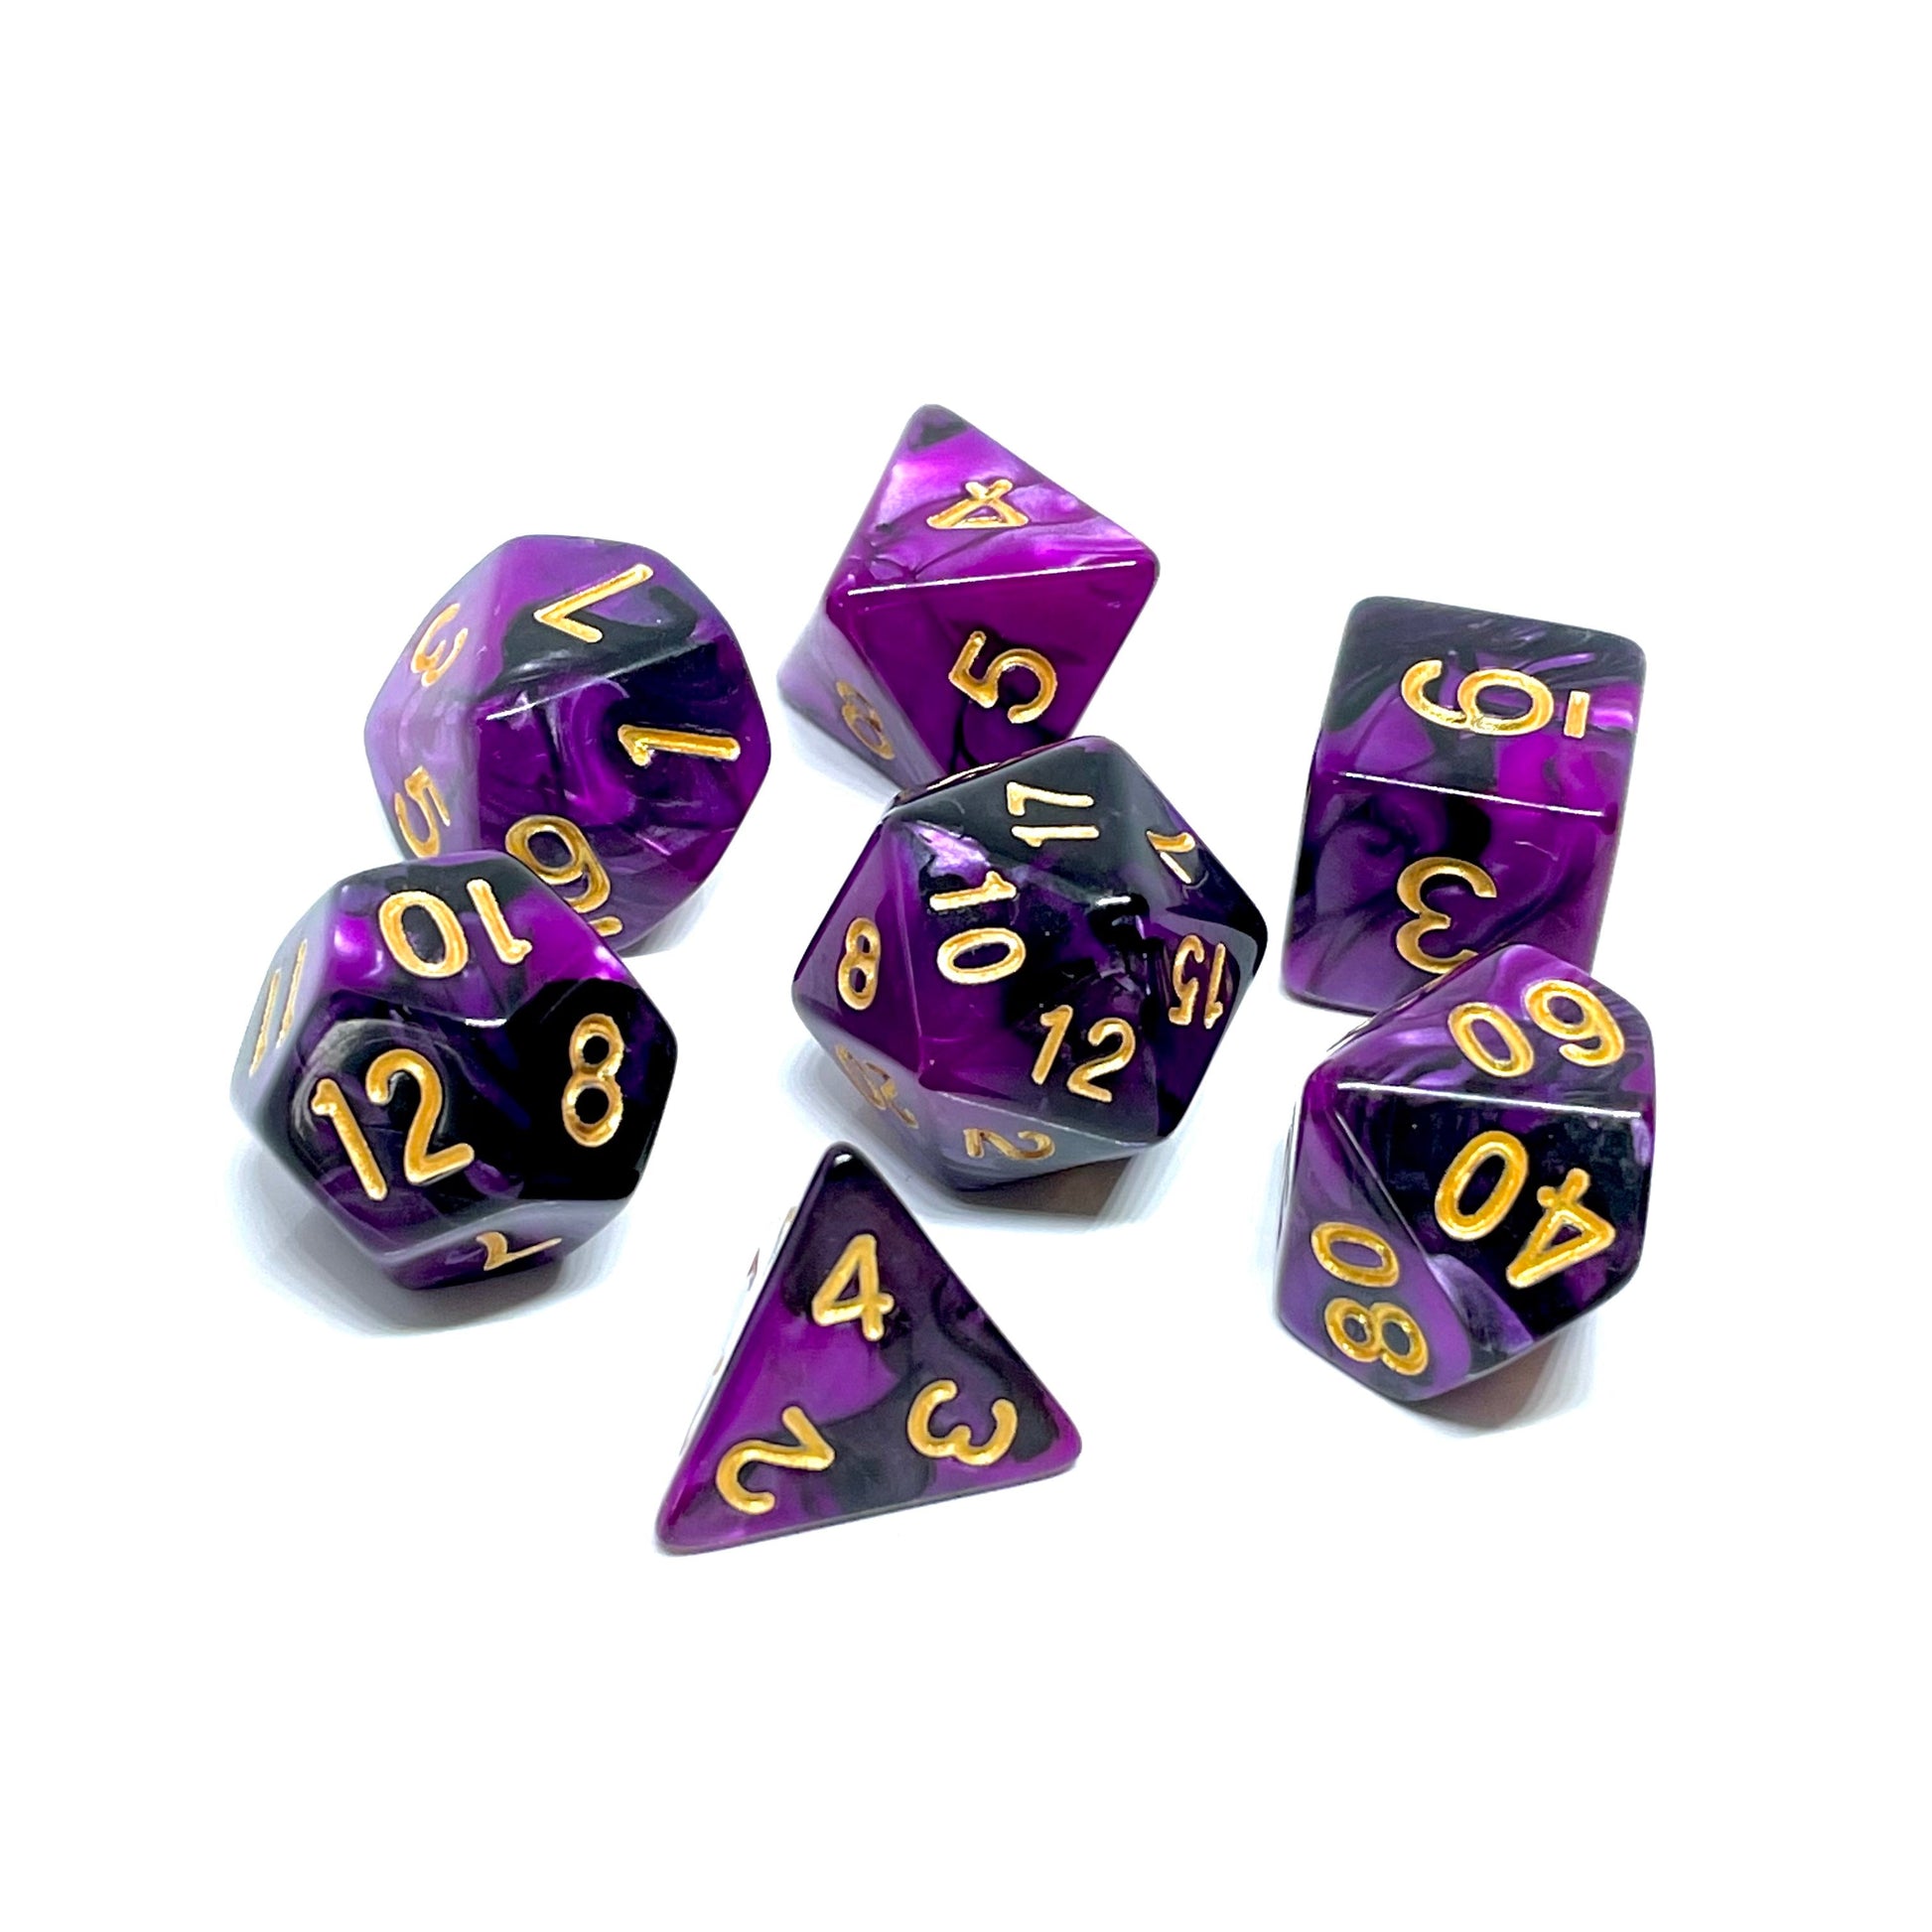 dnd dice set purple and black beholder dice